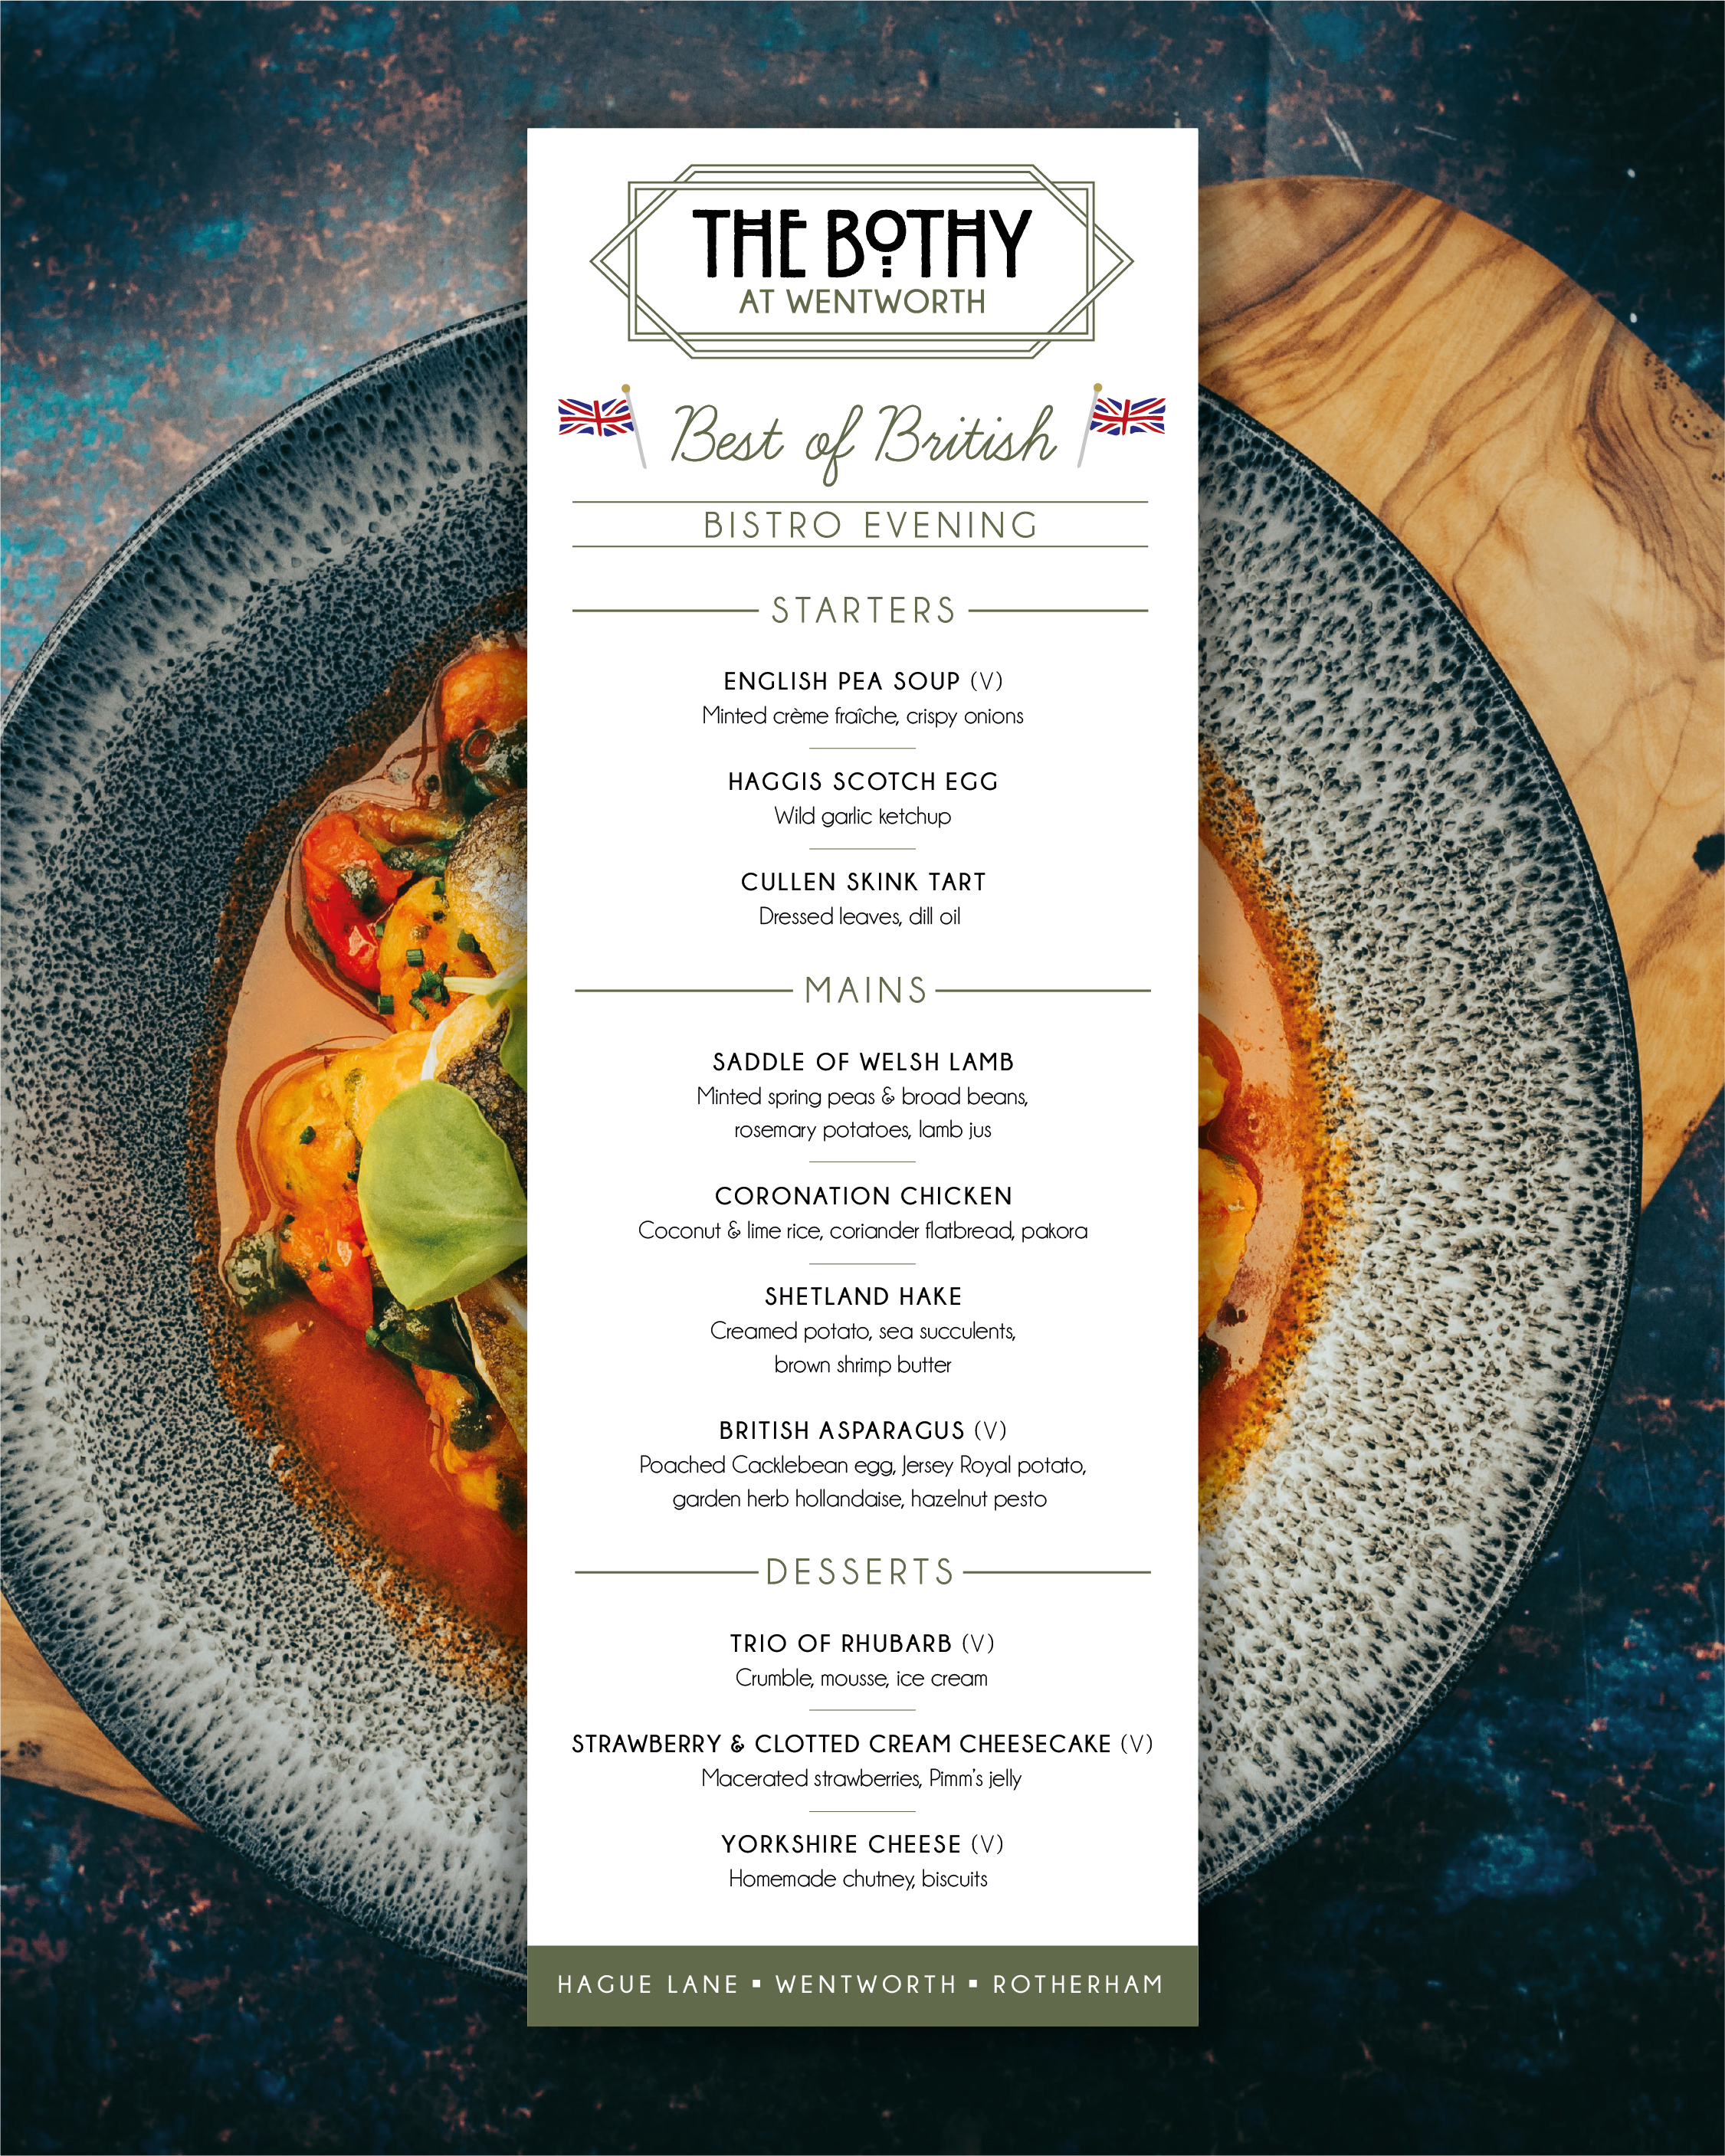 The Bothy - Best of British Menu